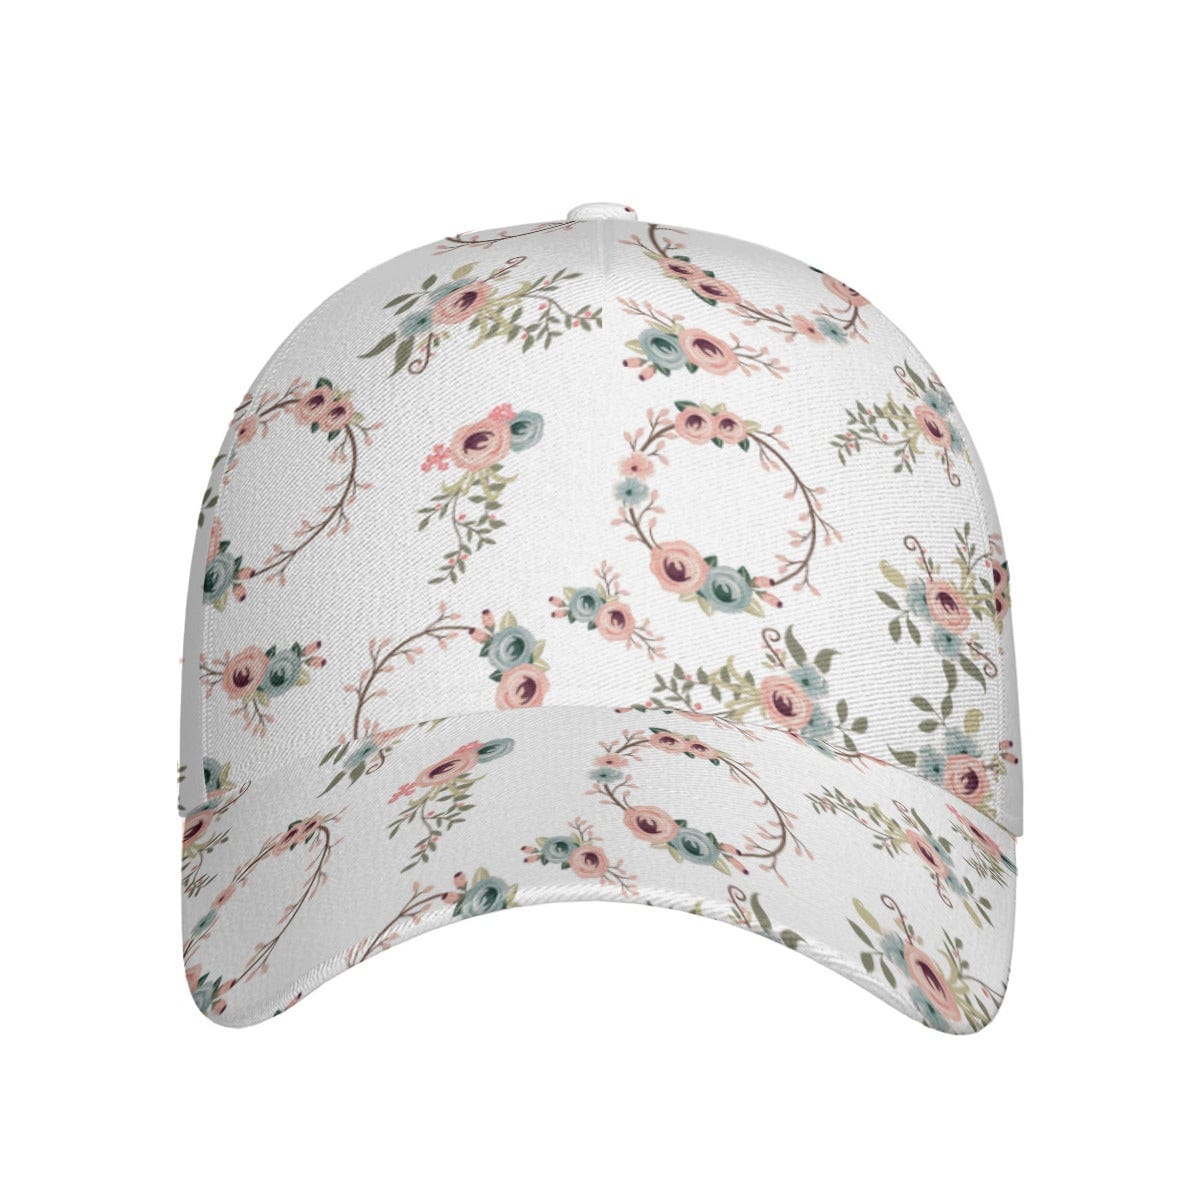 Yoycol Women's U / White Delicate Floral Peaked Cap